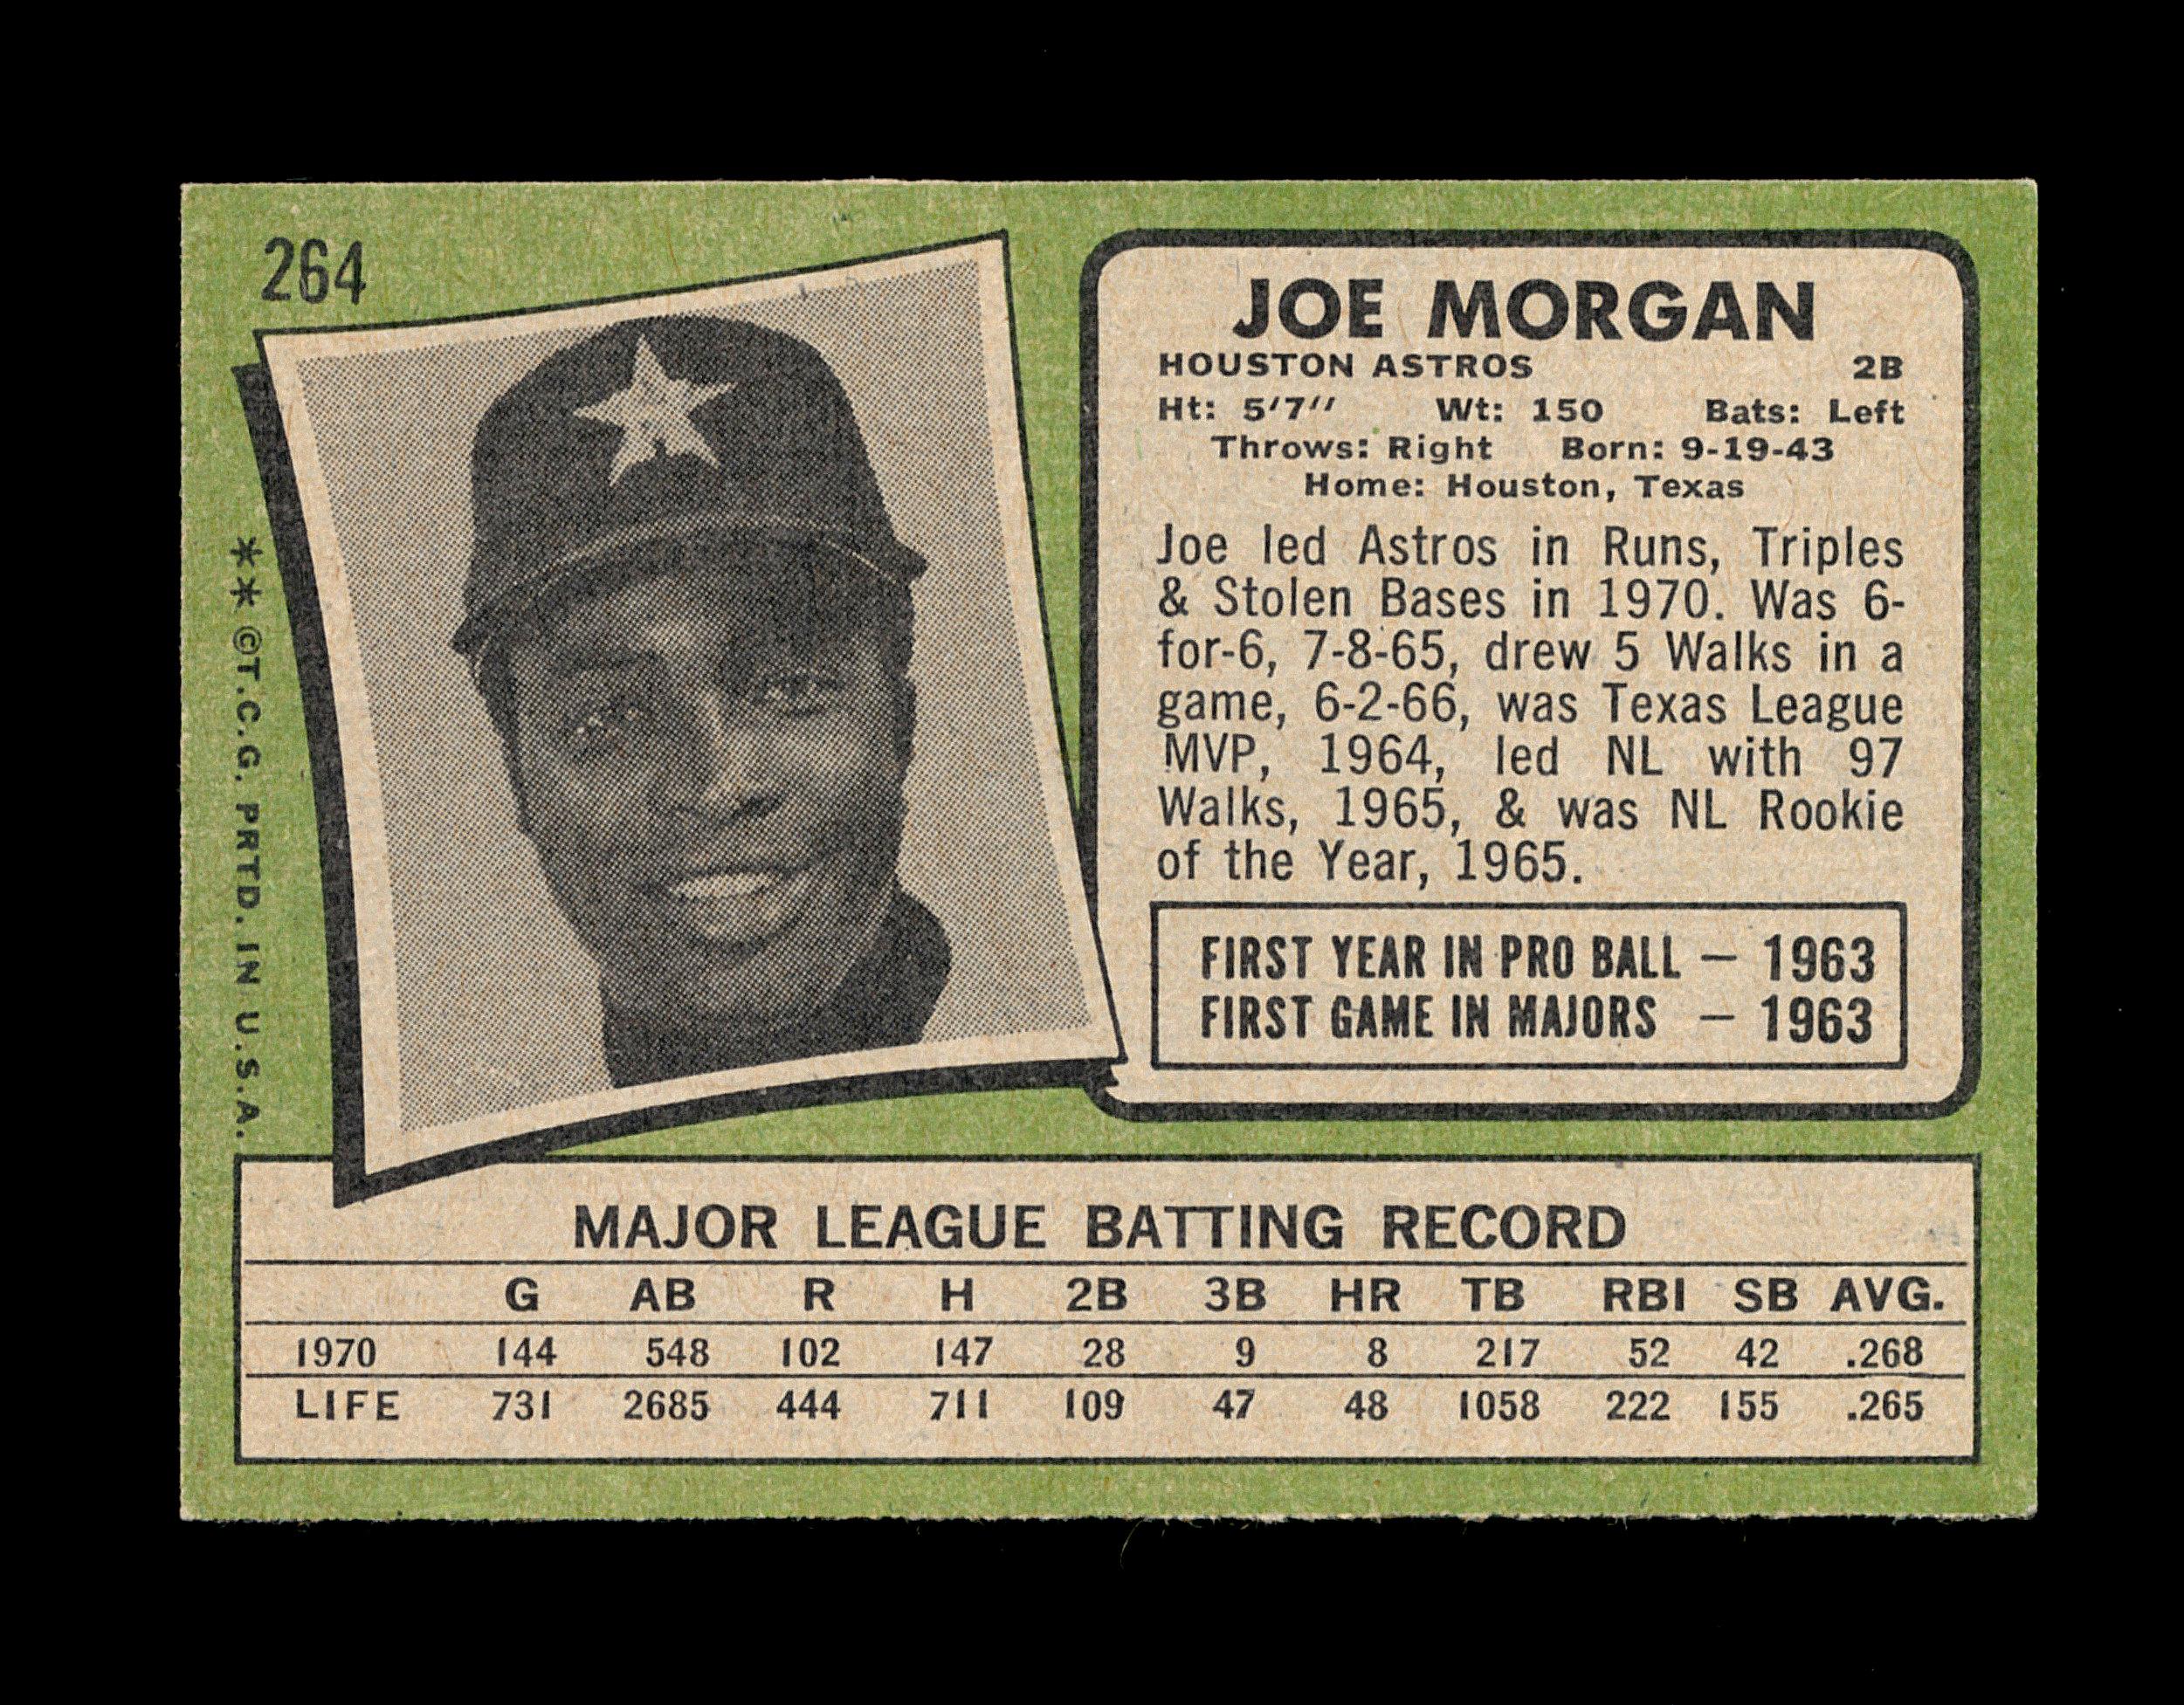 1971 Topps Baseball Card #264 Hall of Famer Joe Morgan Houston Astros